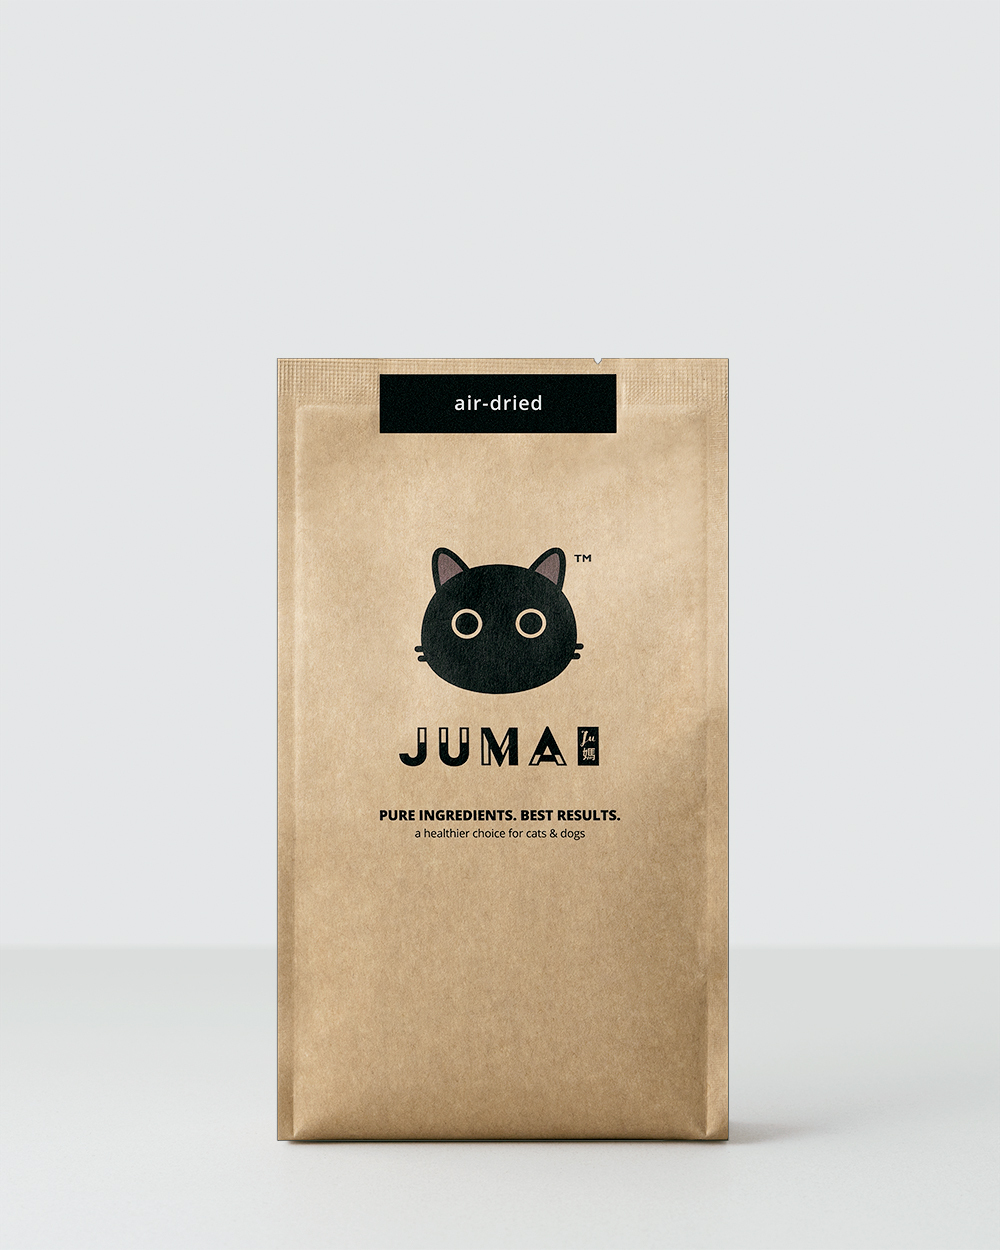 juma-air-dried-meal-300g-pet-food.jpg